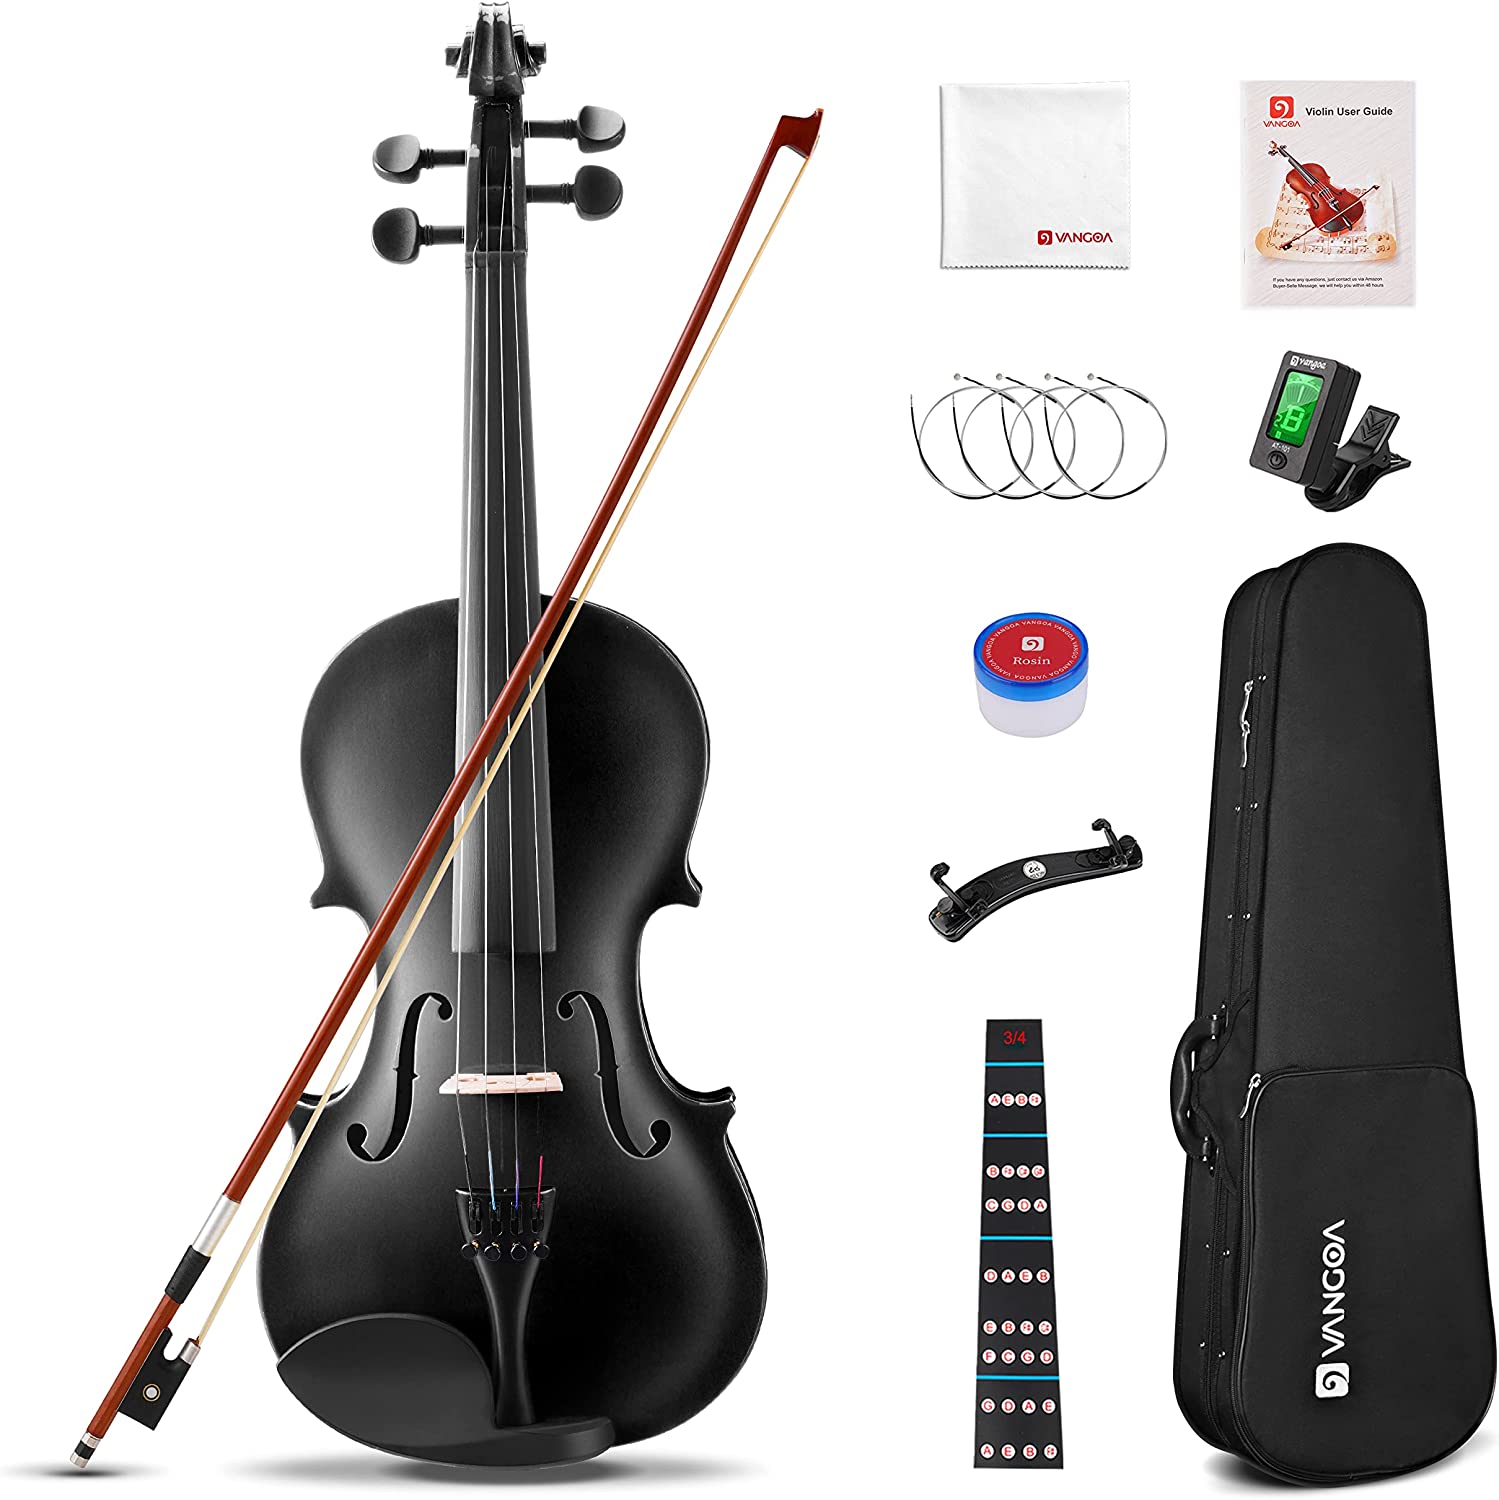 available Amazon]Vangoa 4/4 Acoustic Violin